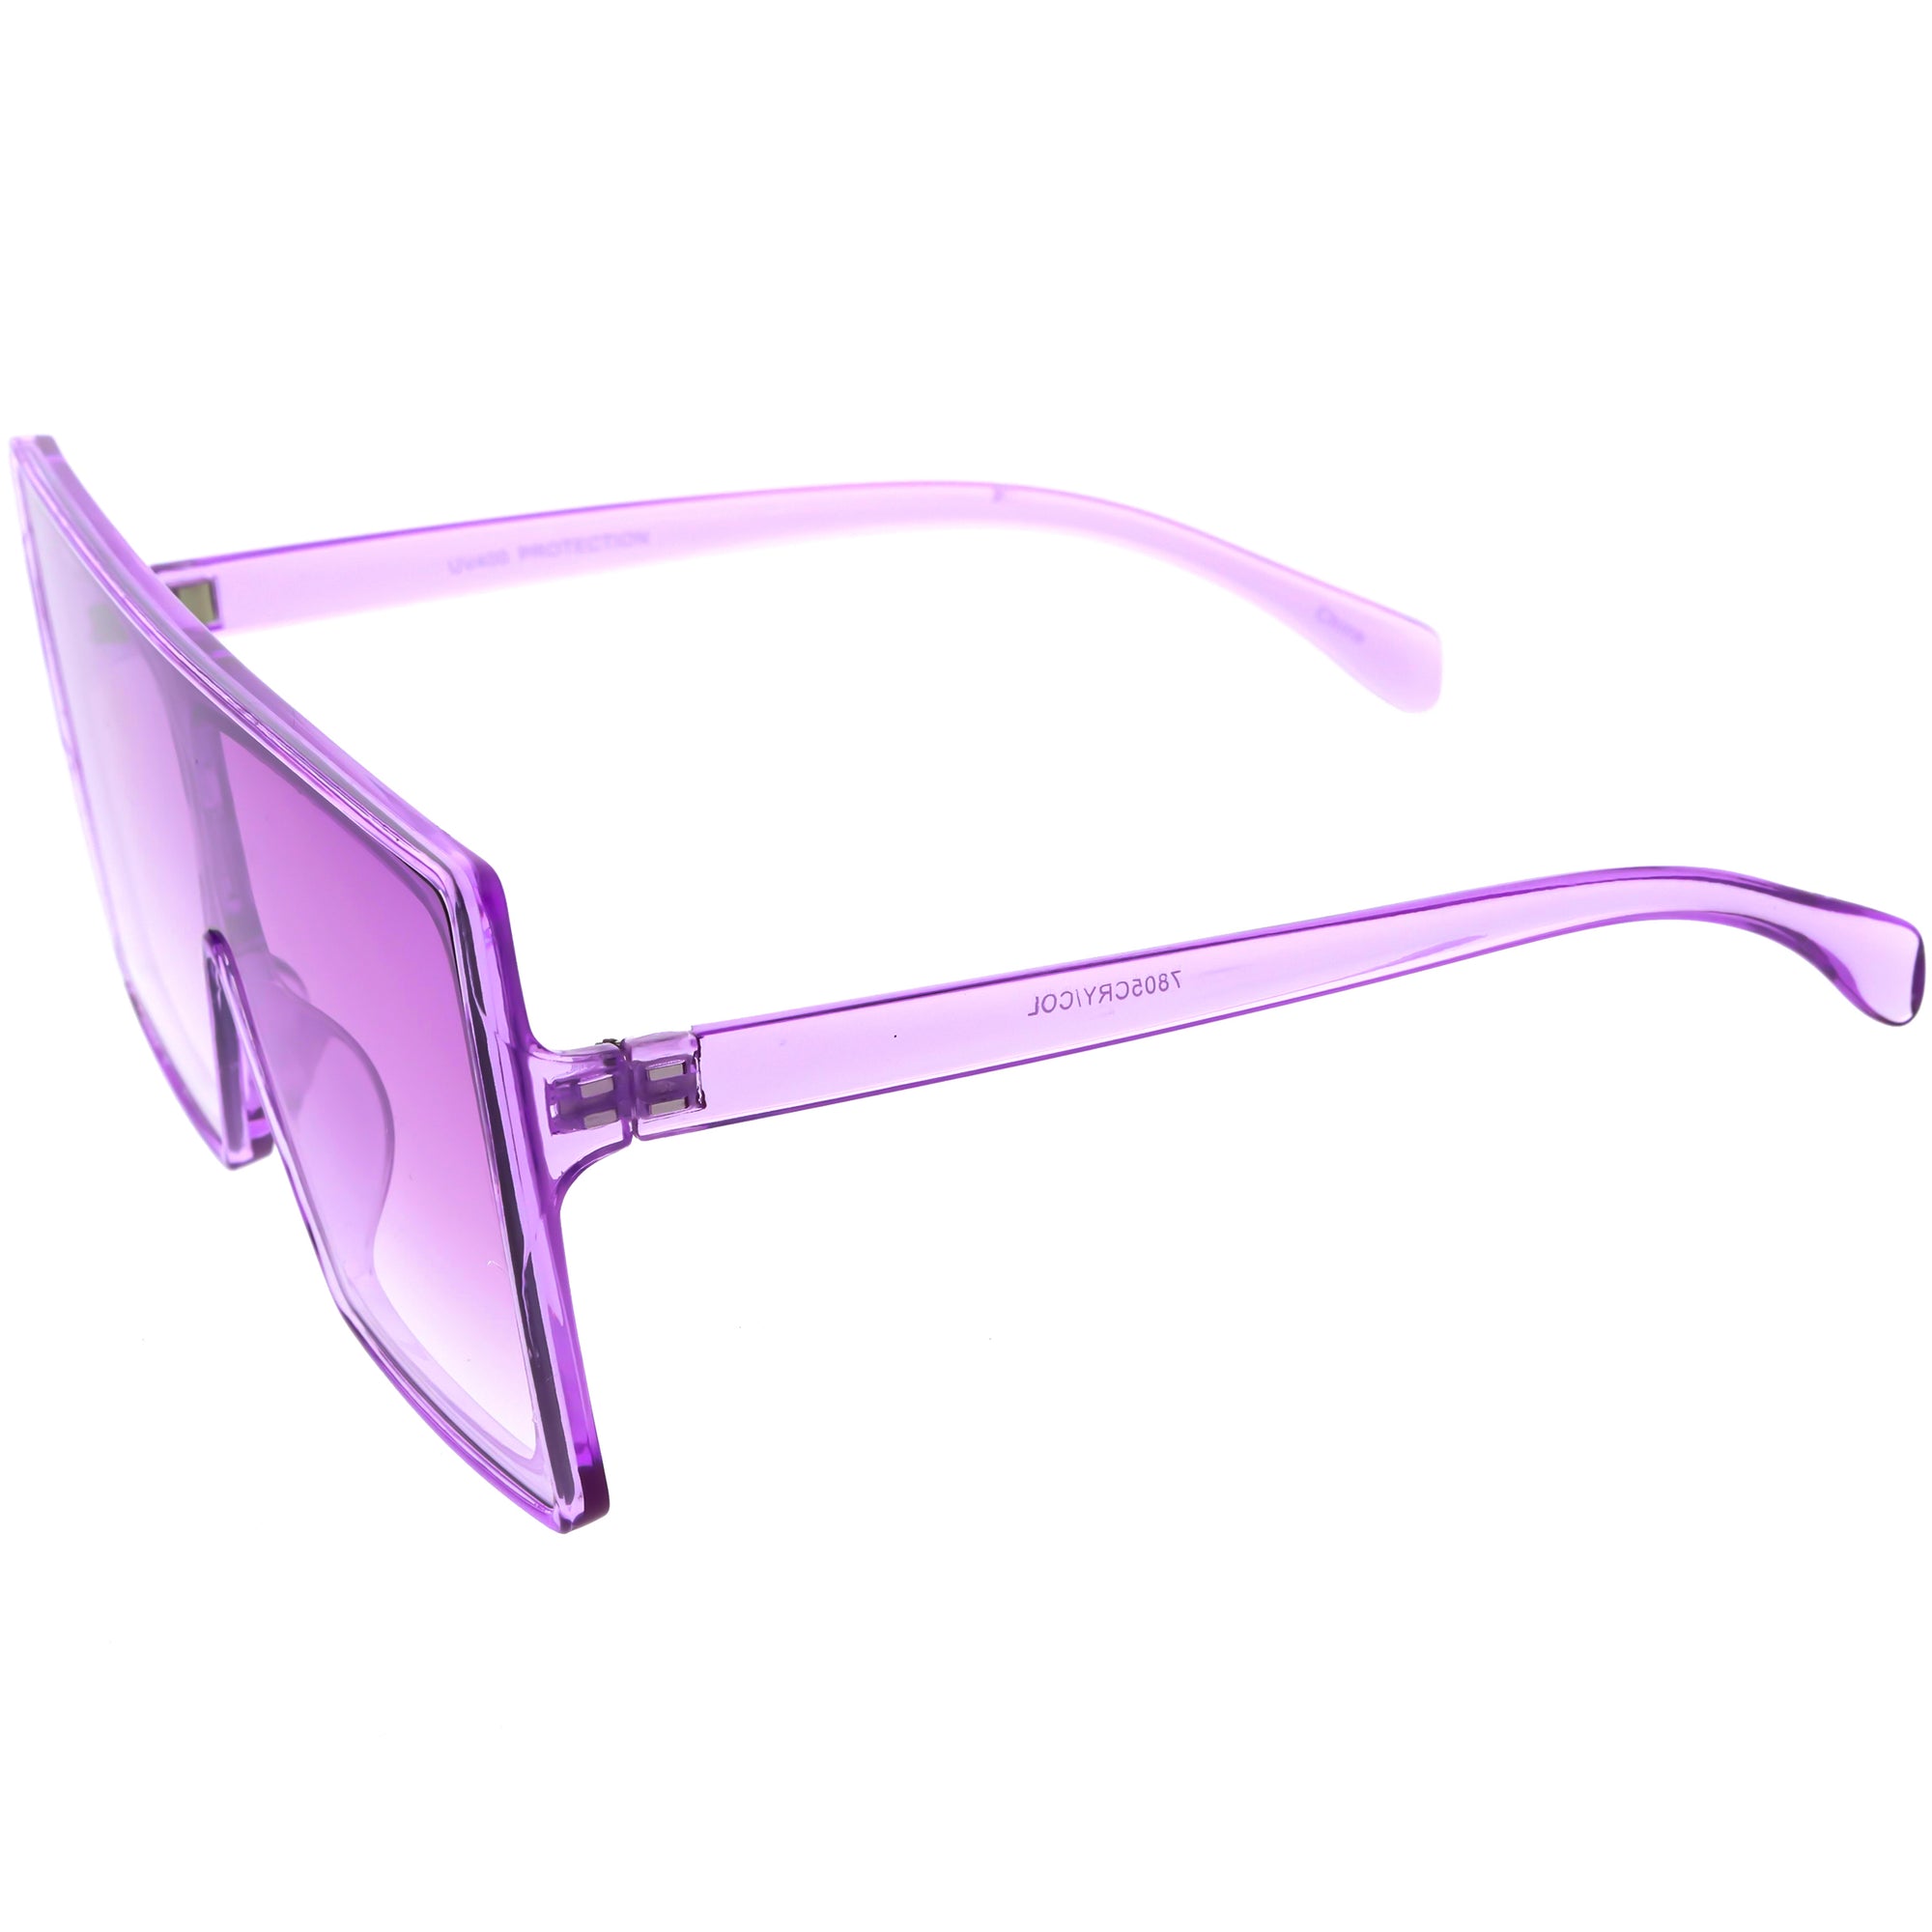 zeroUV Sleek Oversize Flat Top Shield Sunglasses